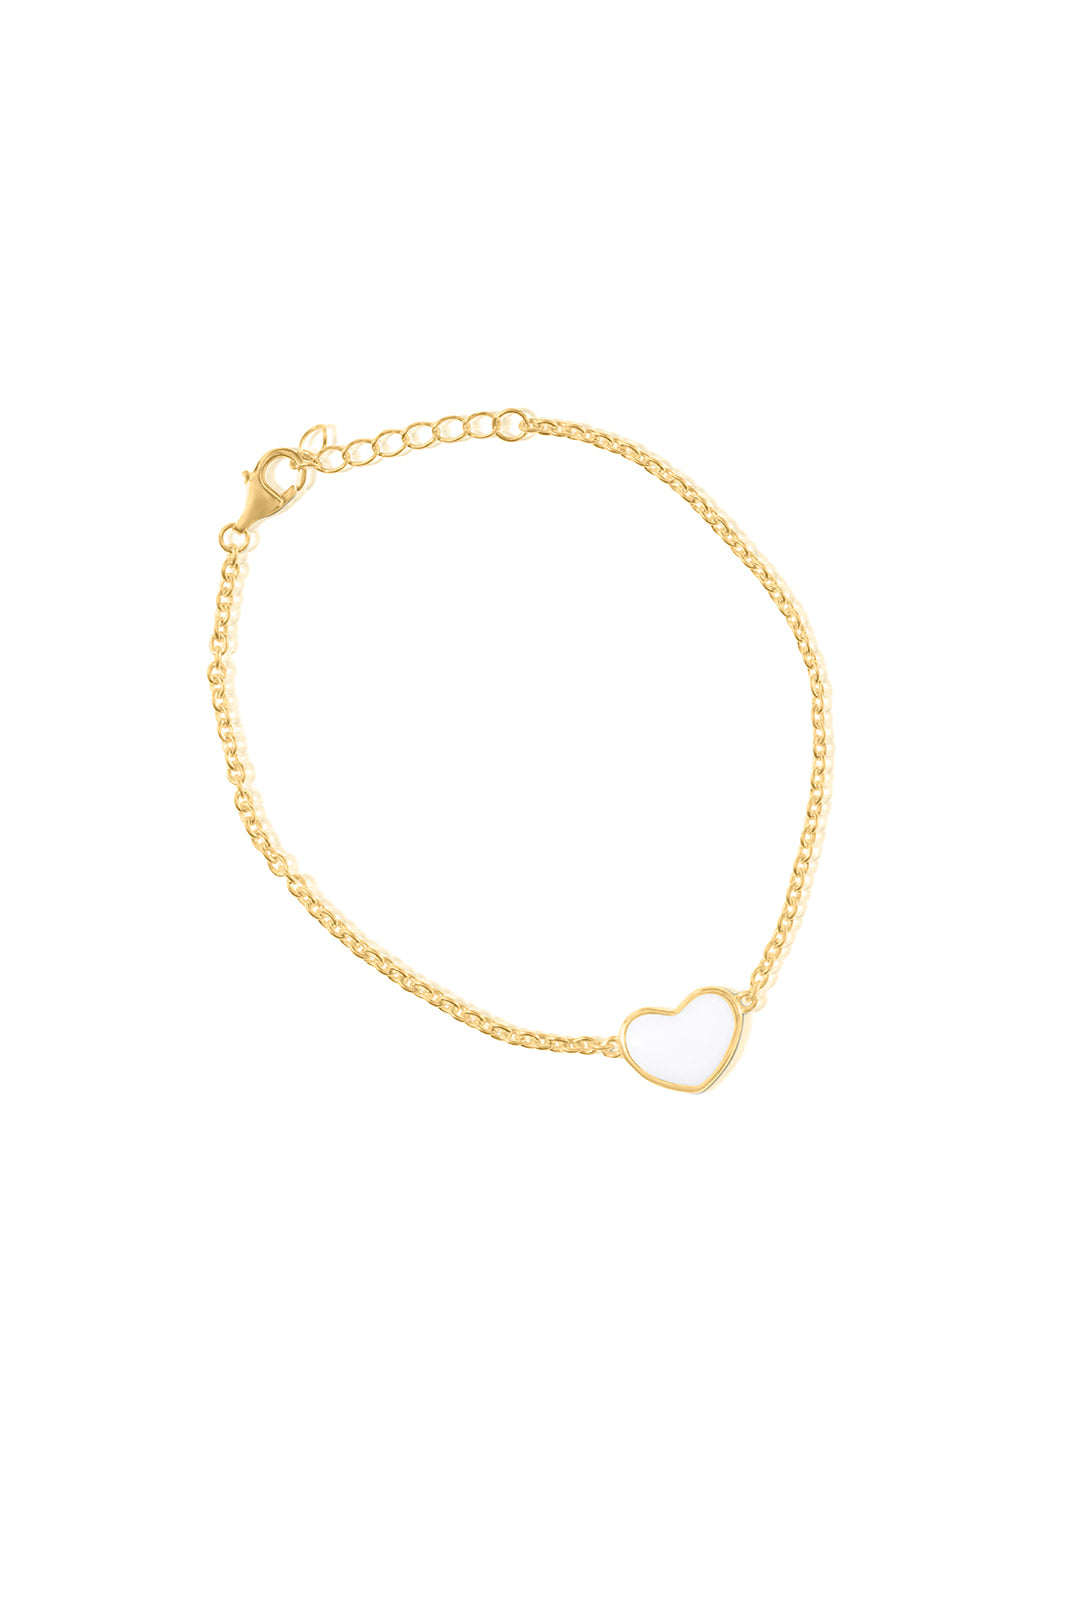 Breastmilk Heart Bracelet - 9ct Gold